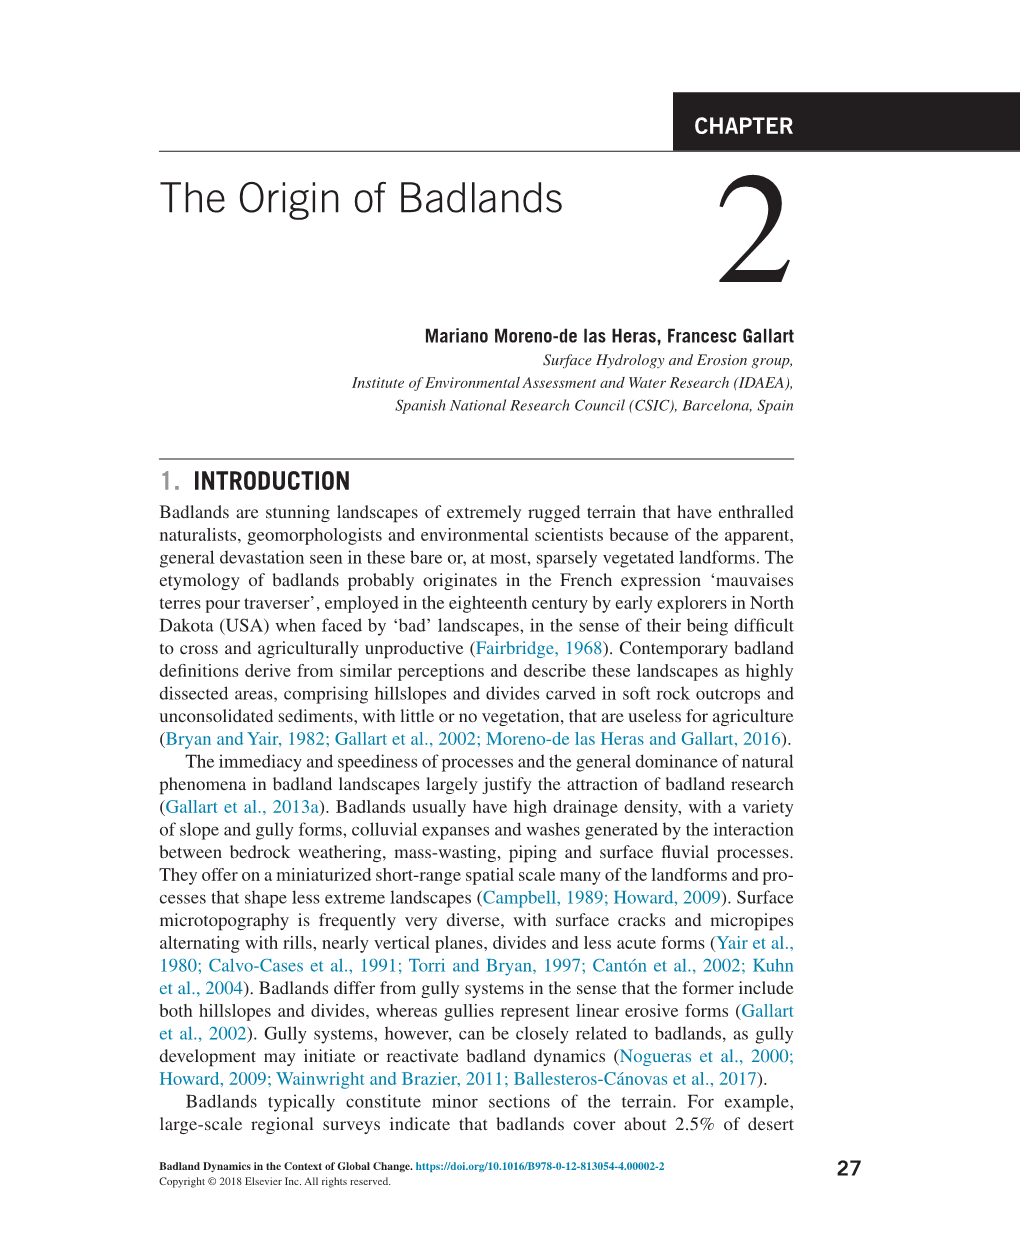 CHAPTER 2 the Origin of Badlands